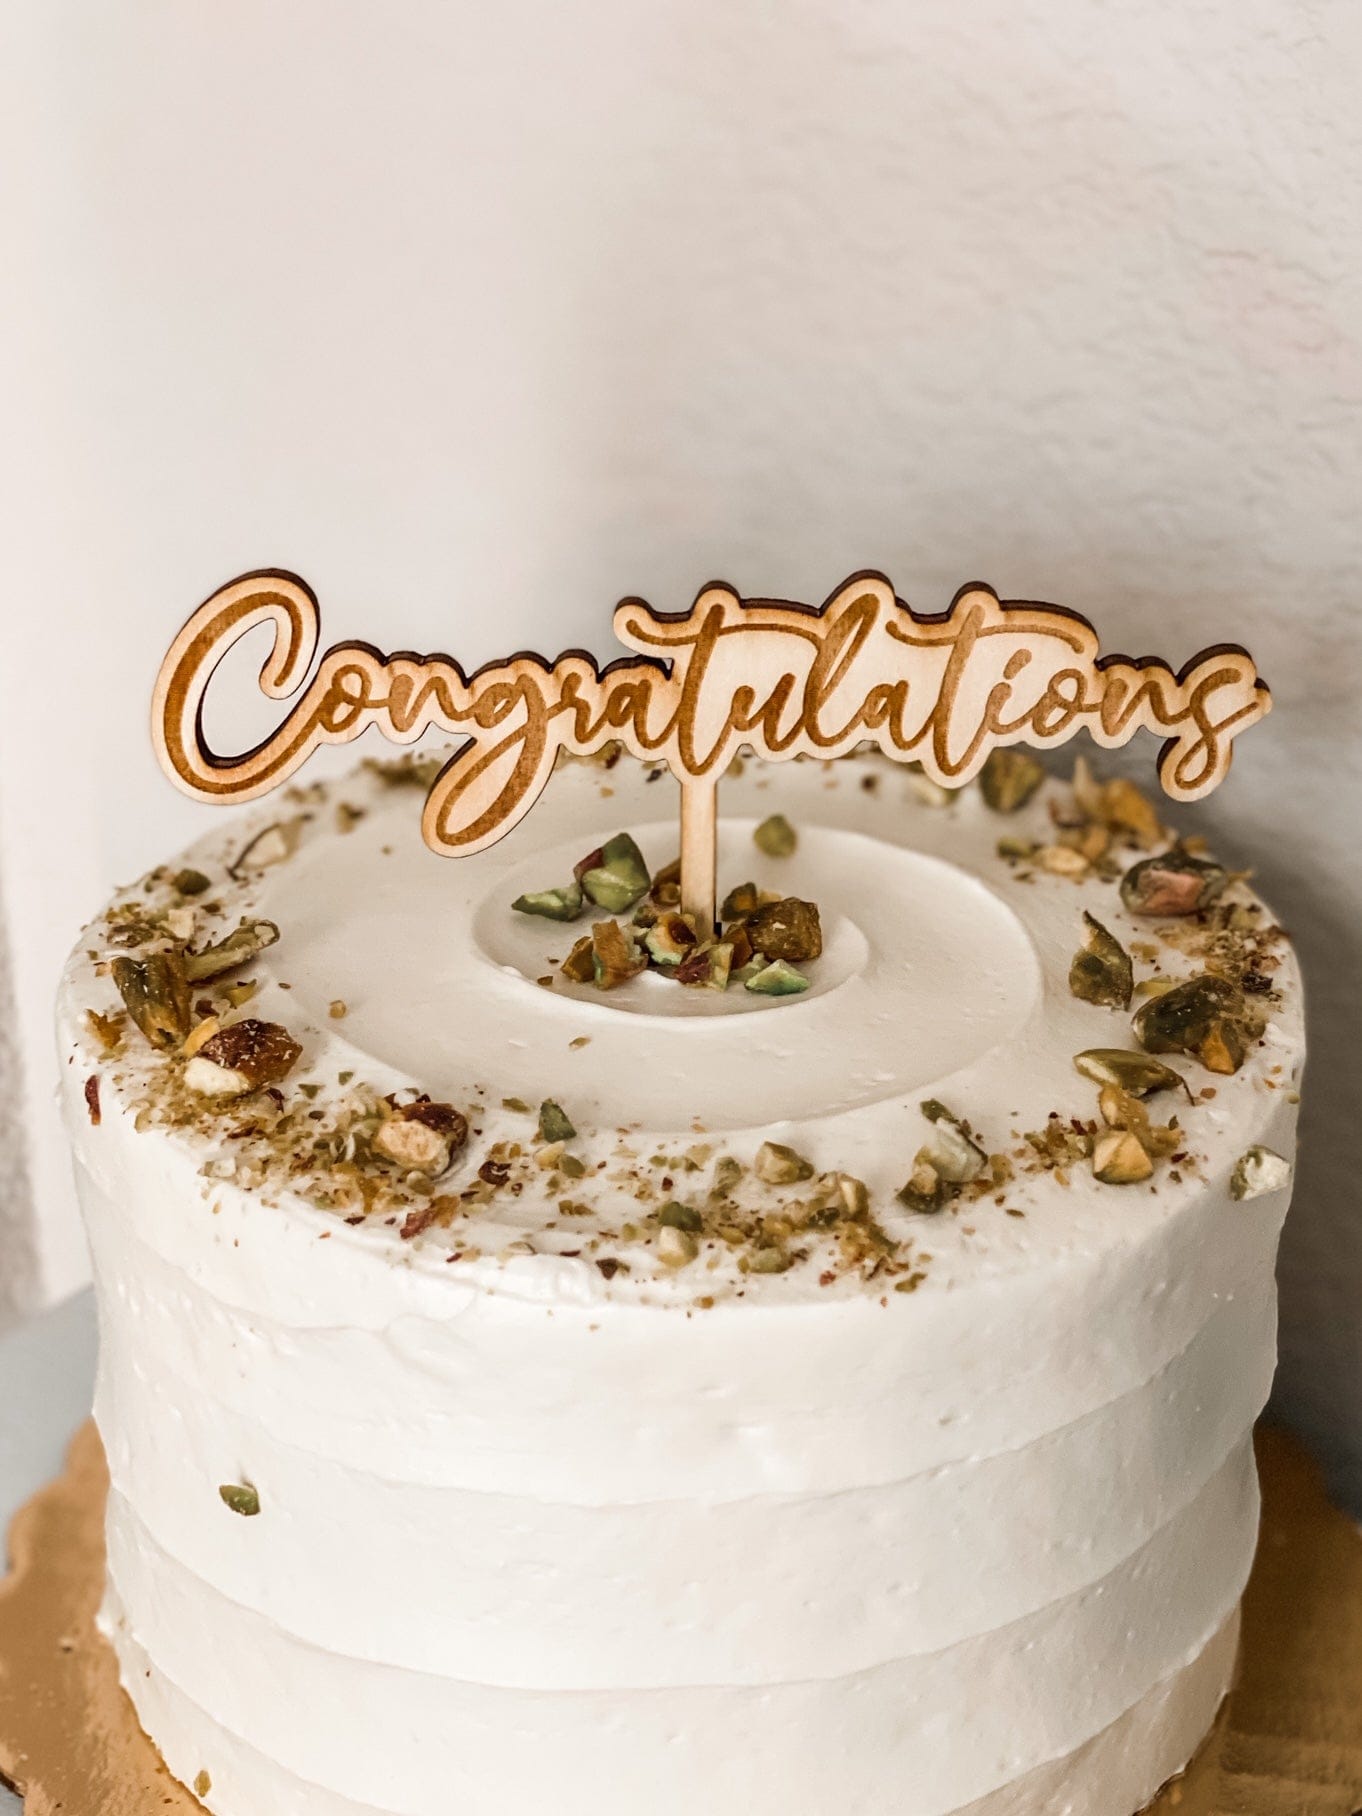 Congratulations Cakes | Cake Delivery In Delhi | Yummy Cake